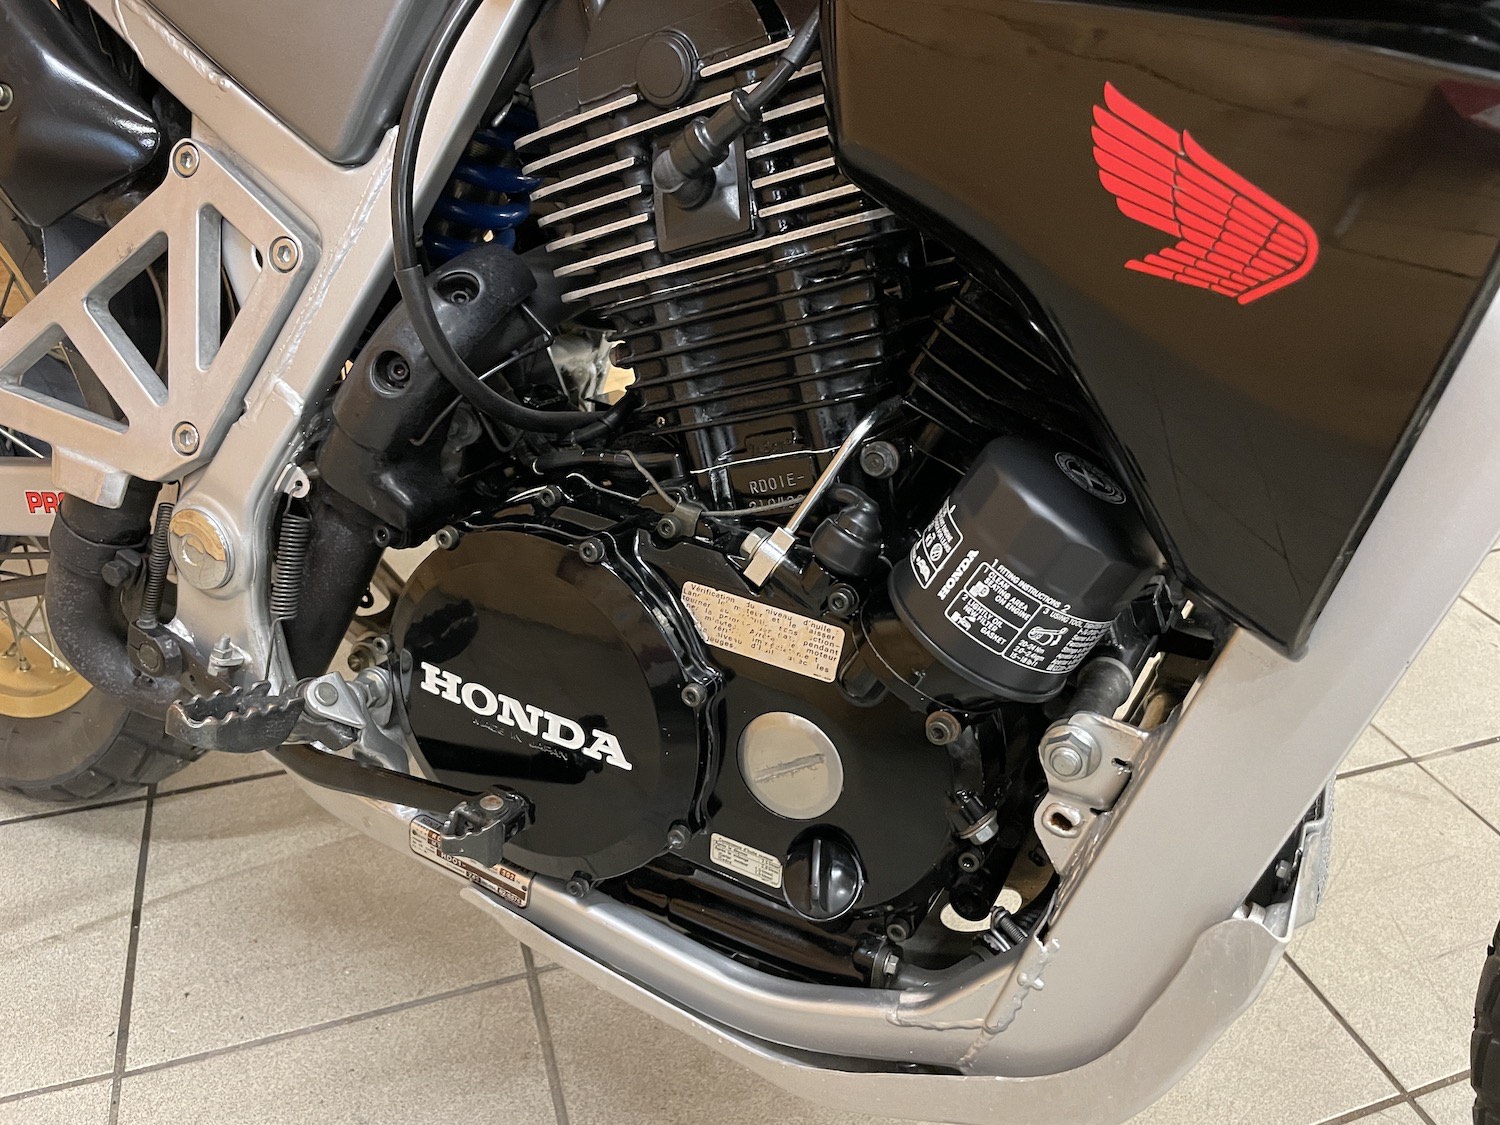 Honda_XLV_750R_cezanne_classic_motorcycles_9-118.jpg